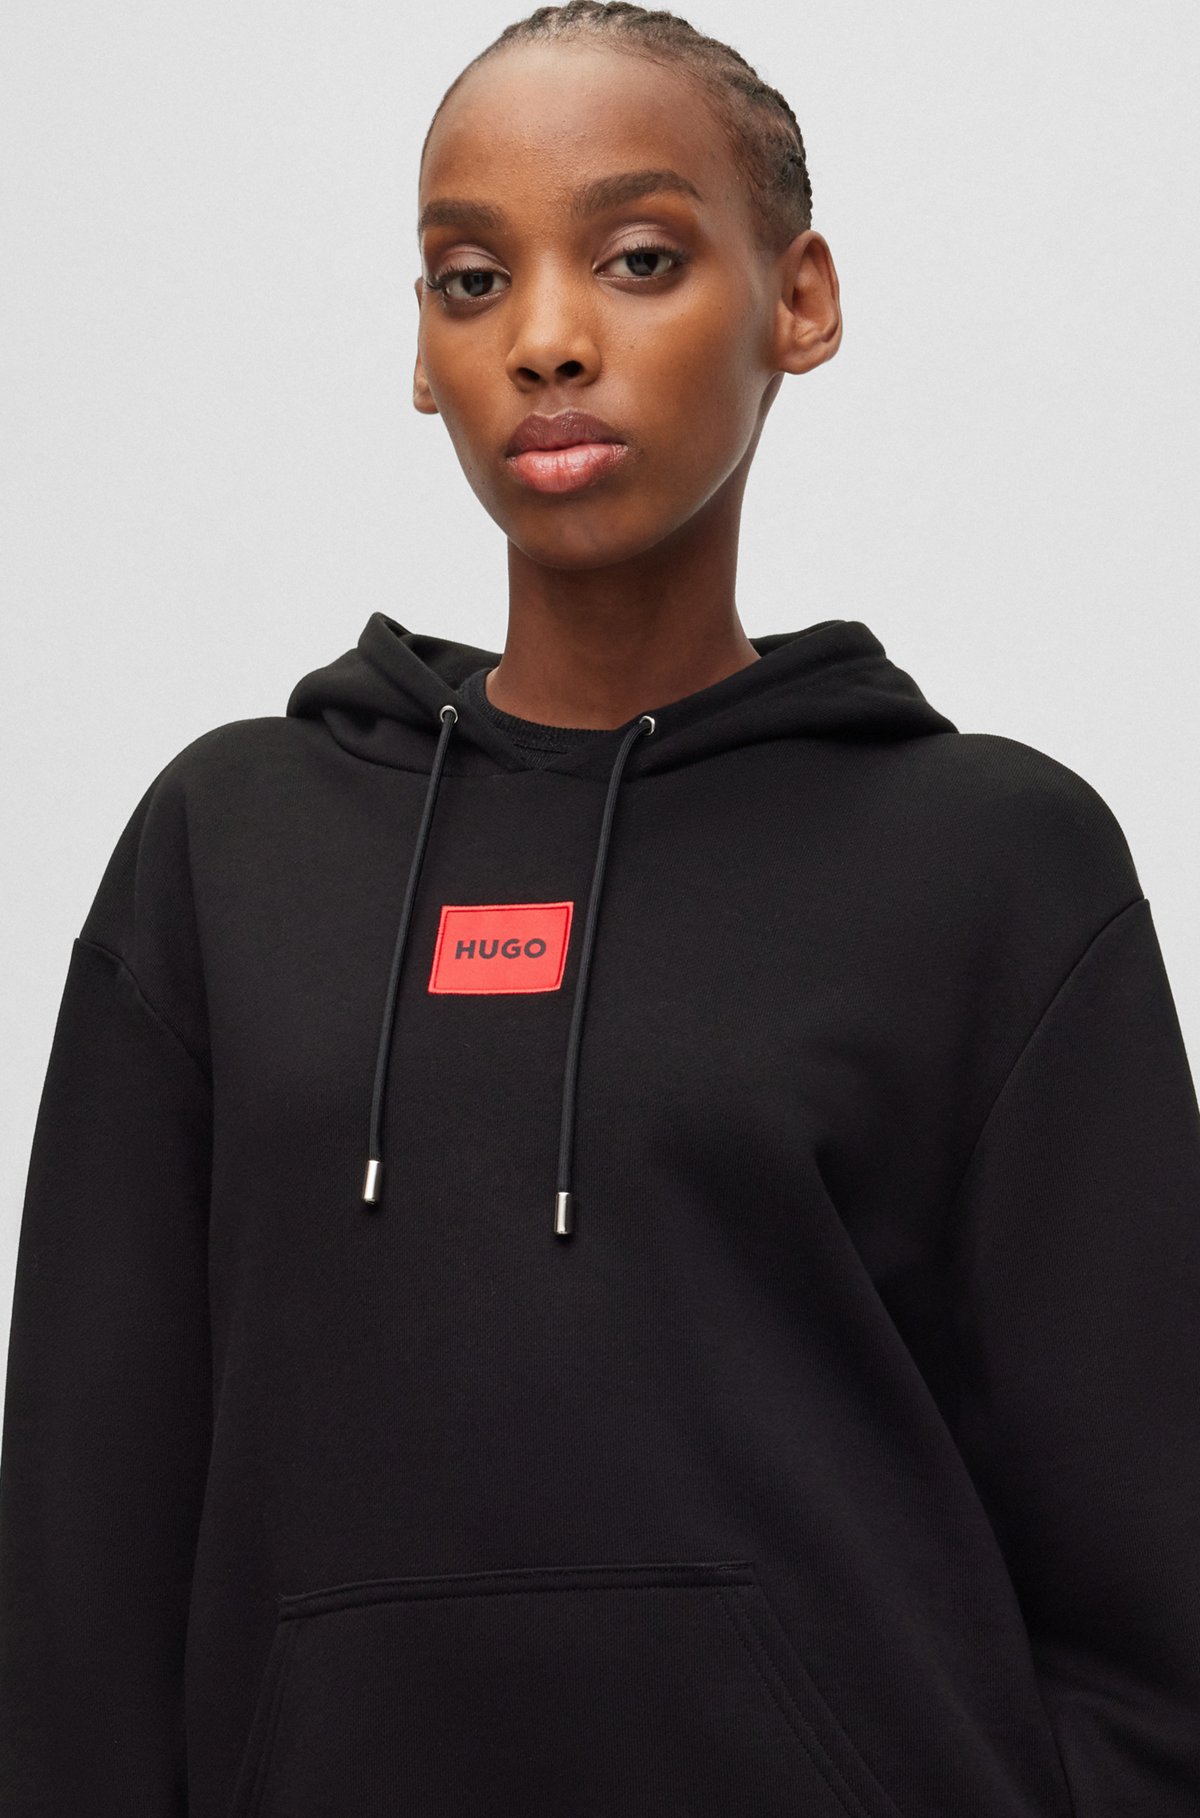 Cotton hooded sweatshirt with logo label, Black